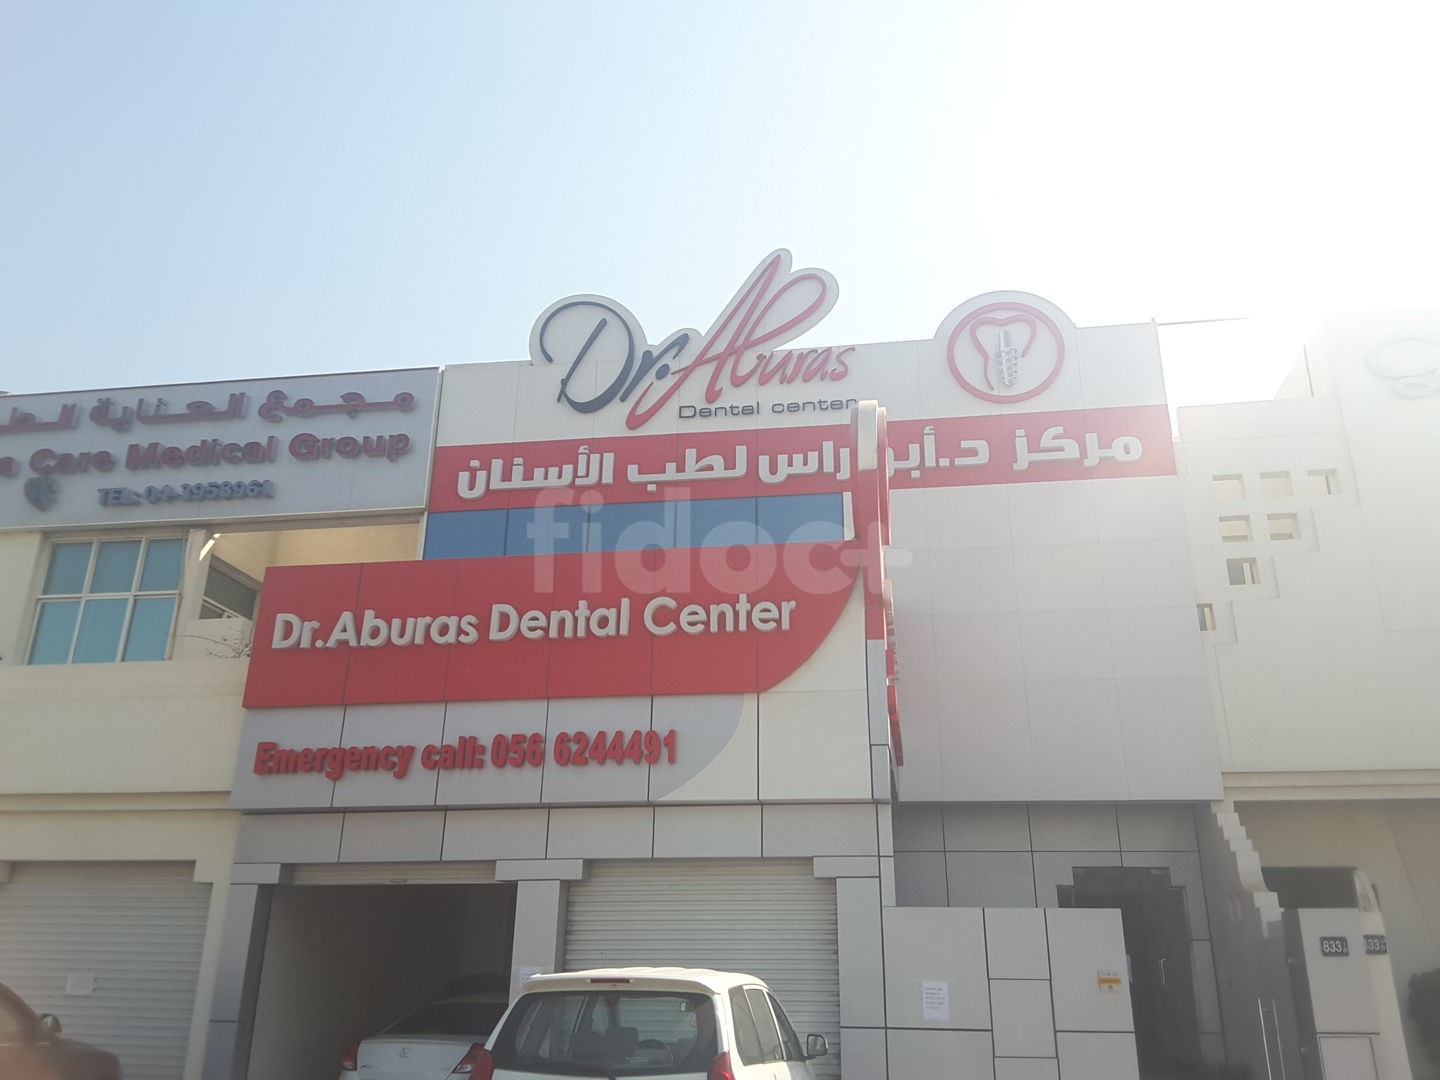 Dr. Aburas Dental Center, Dubai